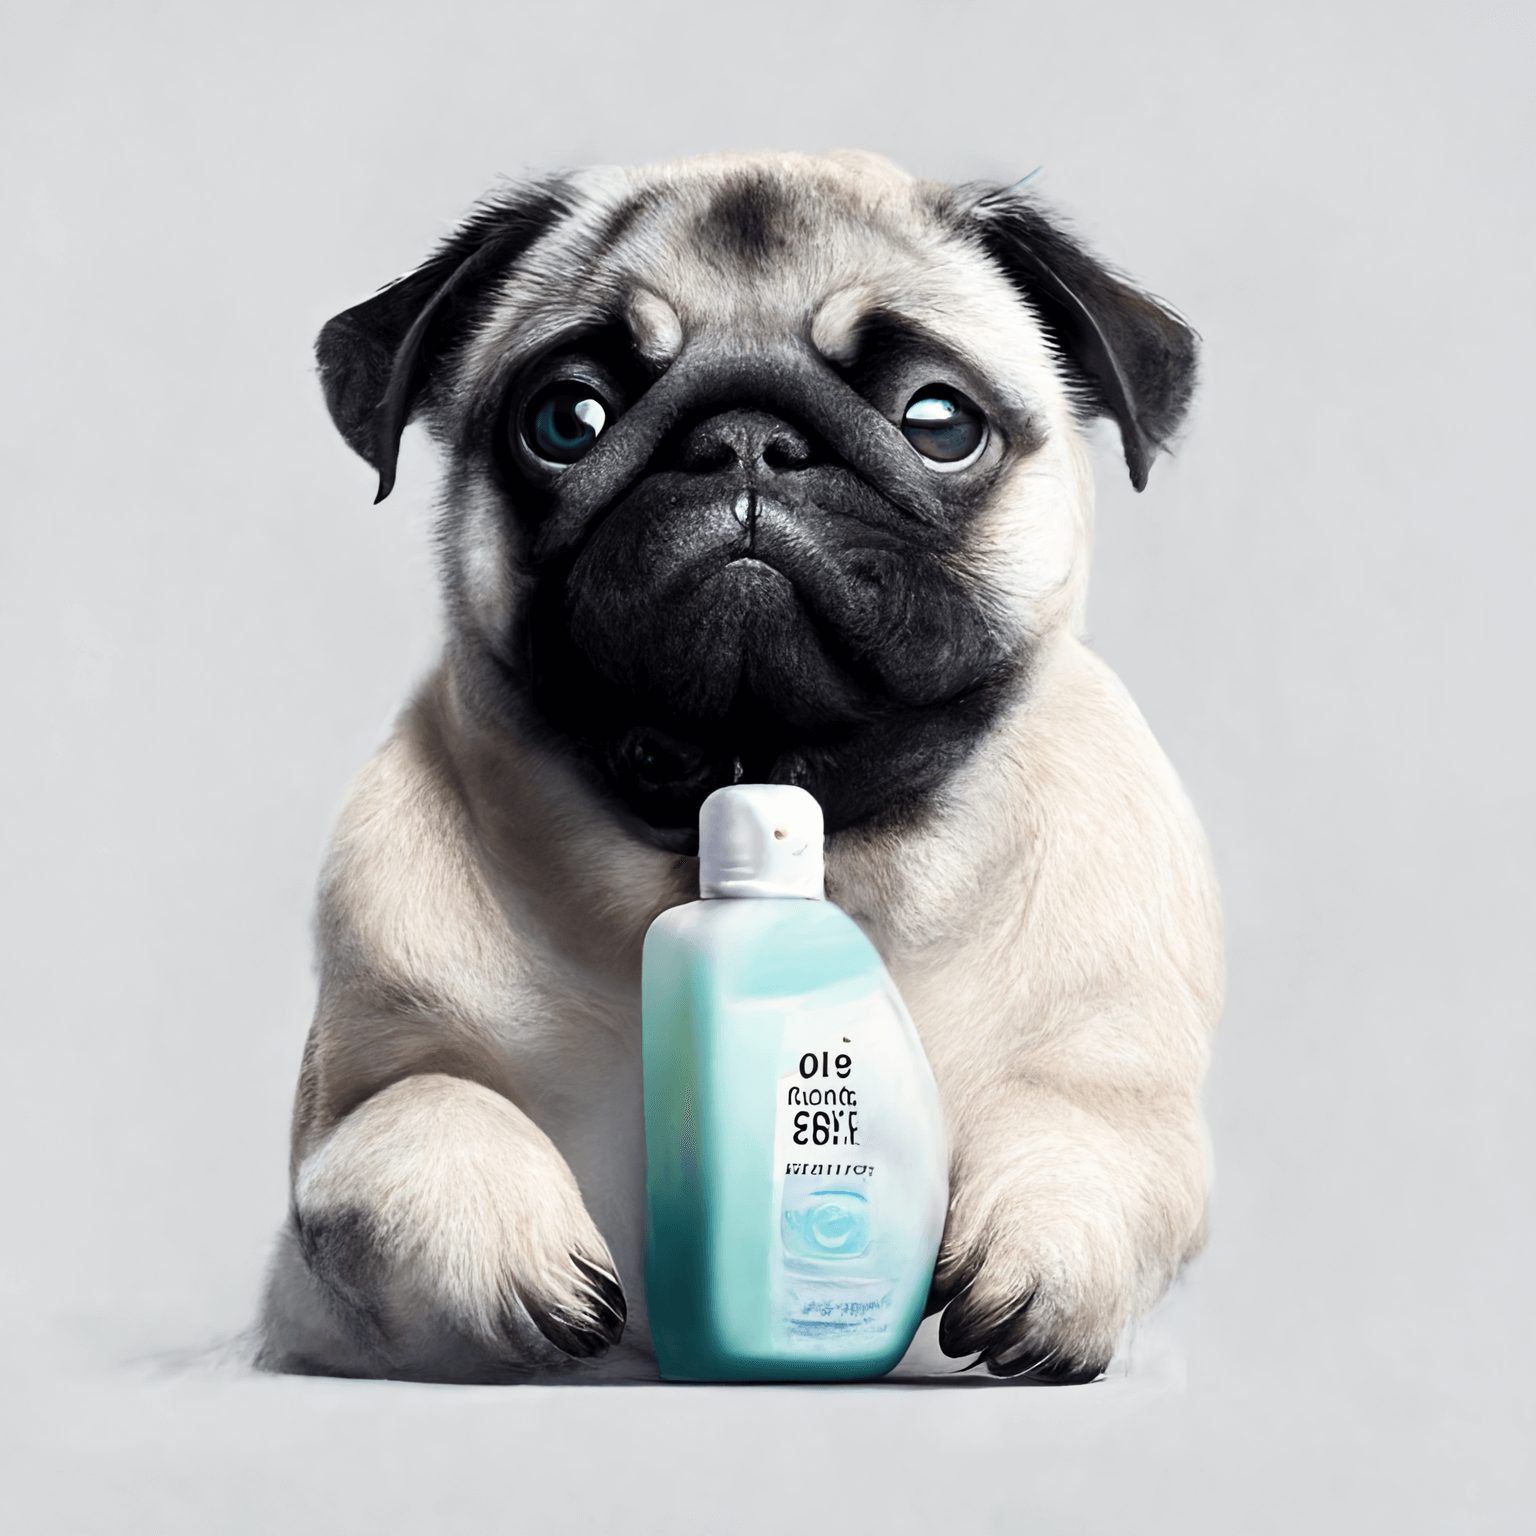 Pug Holding a Bottle of Shampoo